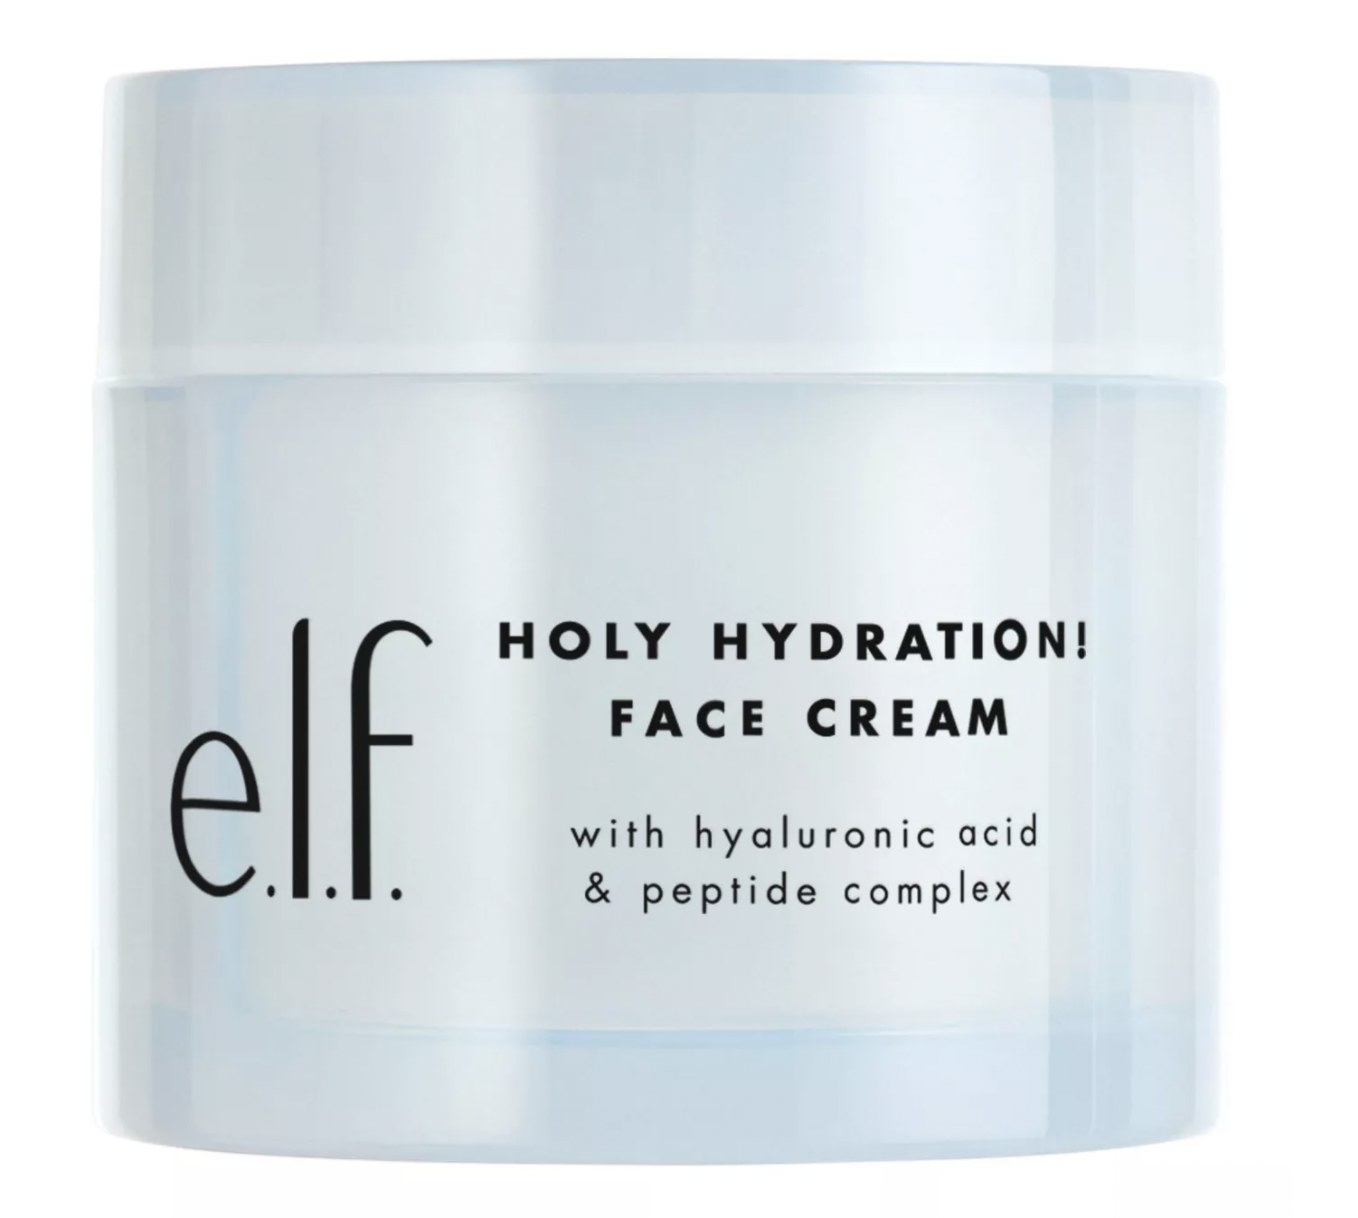 e.l.f. holy hydration face cream product shot